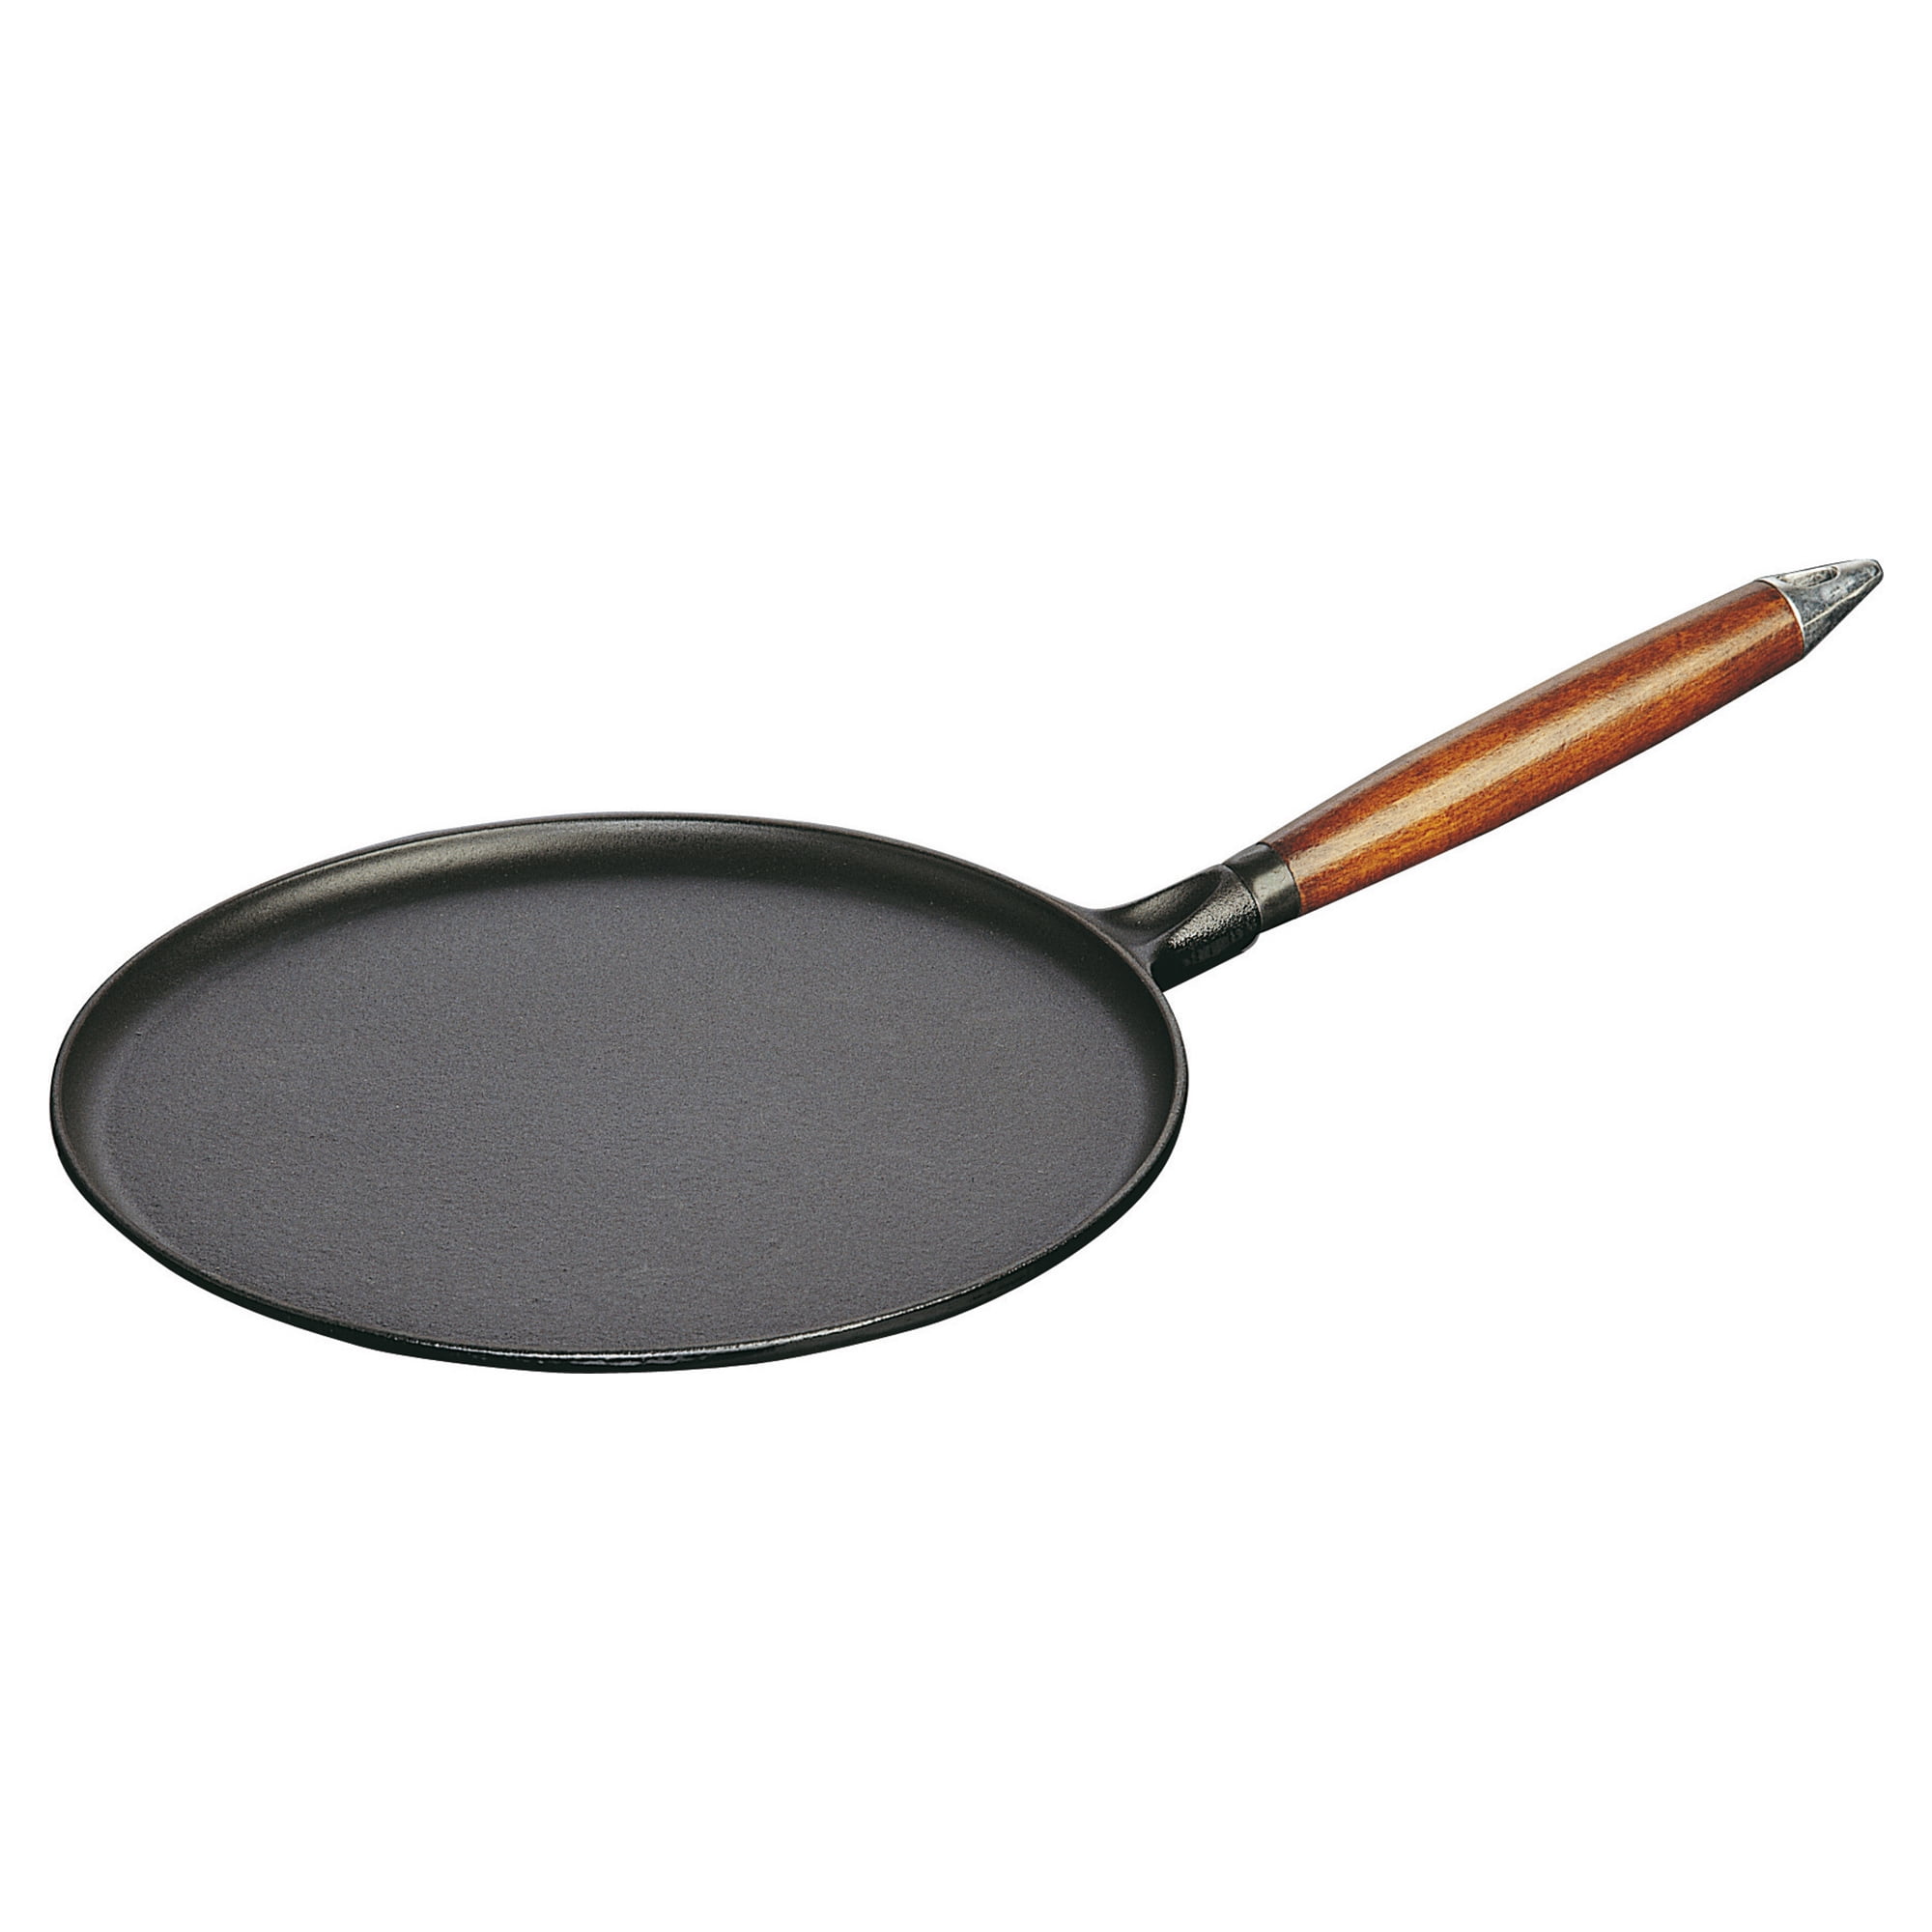 Iron 11” Tawa Good Quality Brand New Long Wooden handle/Crepe/Pancake Pan 